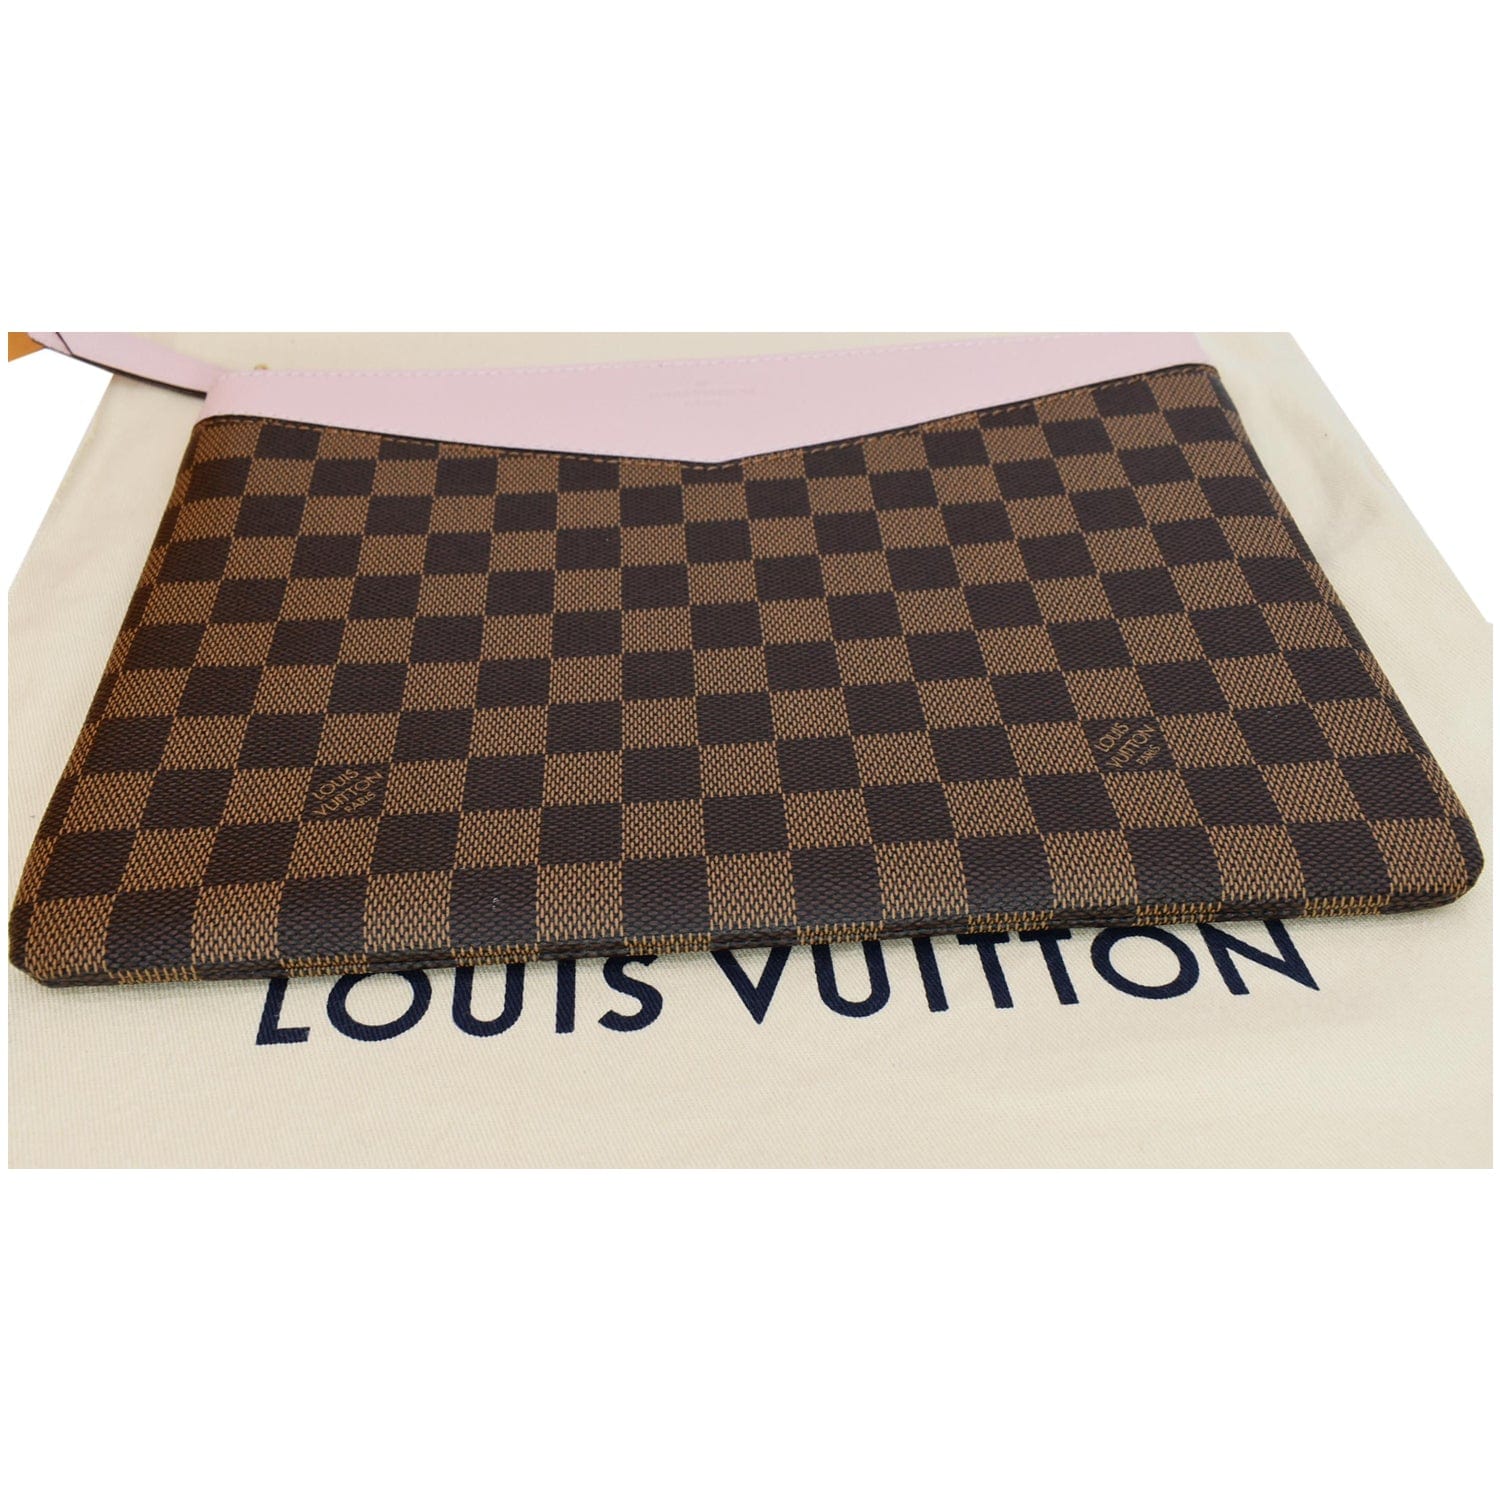 Louis Vuitton Monogram Canvas and Leather Daily Pouch Louis Vuitton